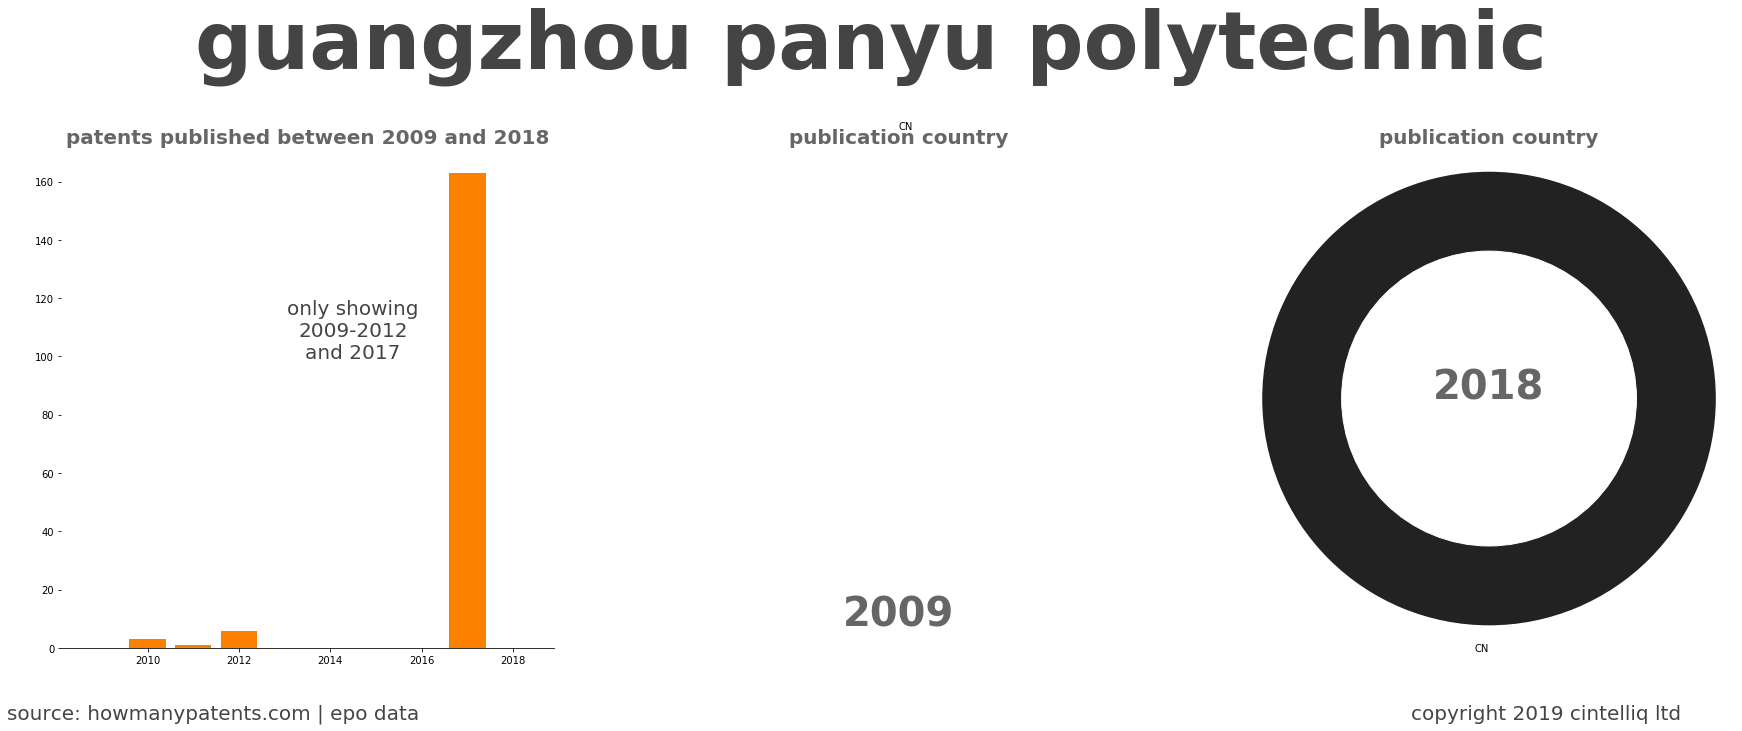 summary of patents for Guangzhou Panyu Polytechnic